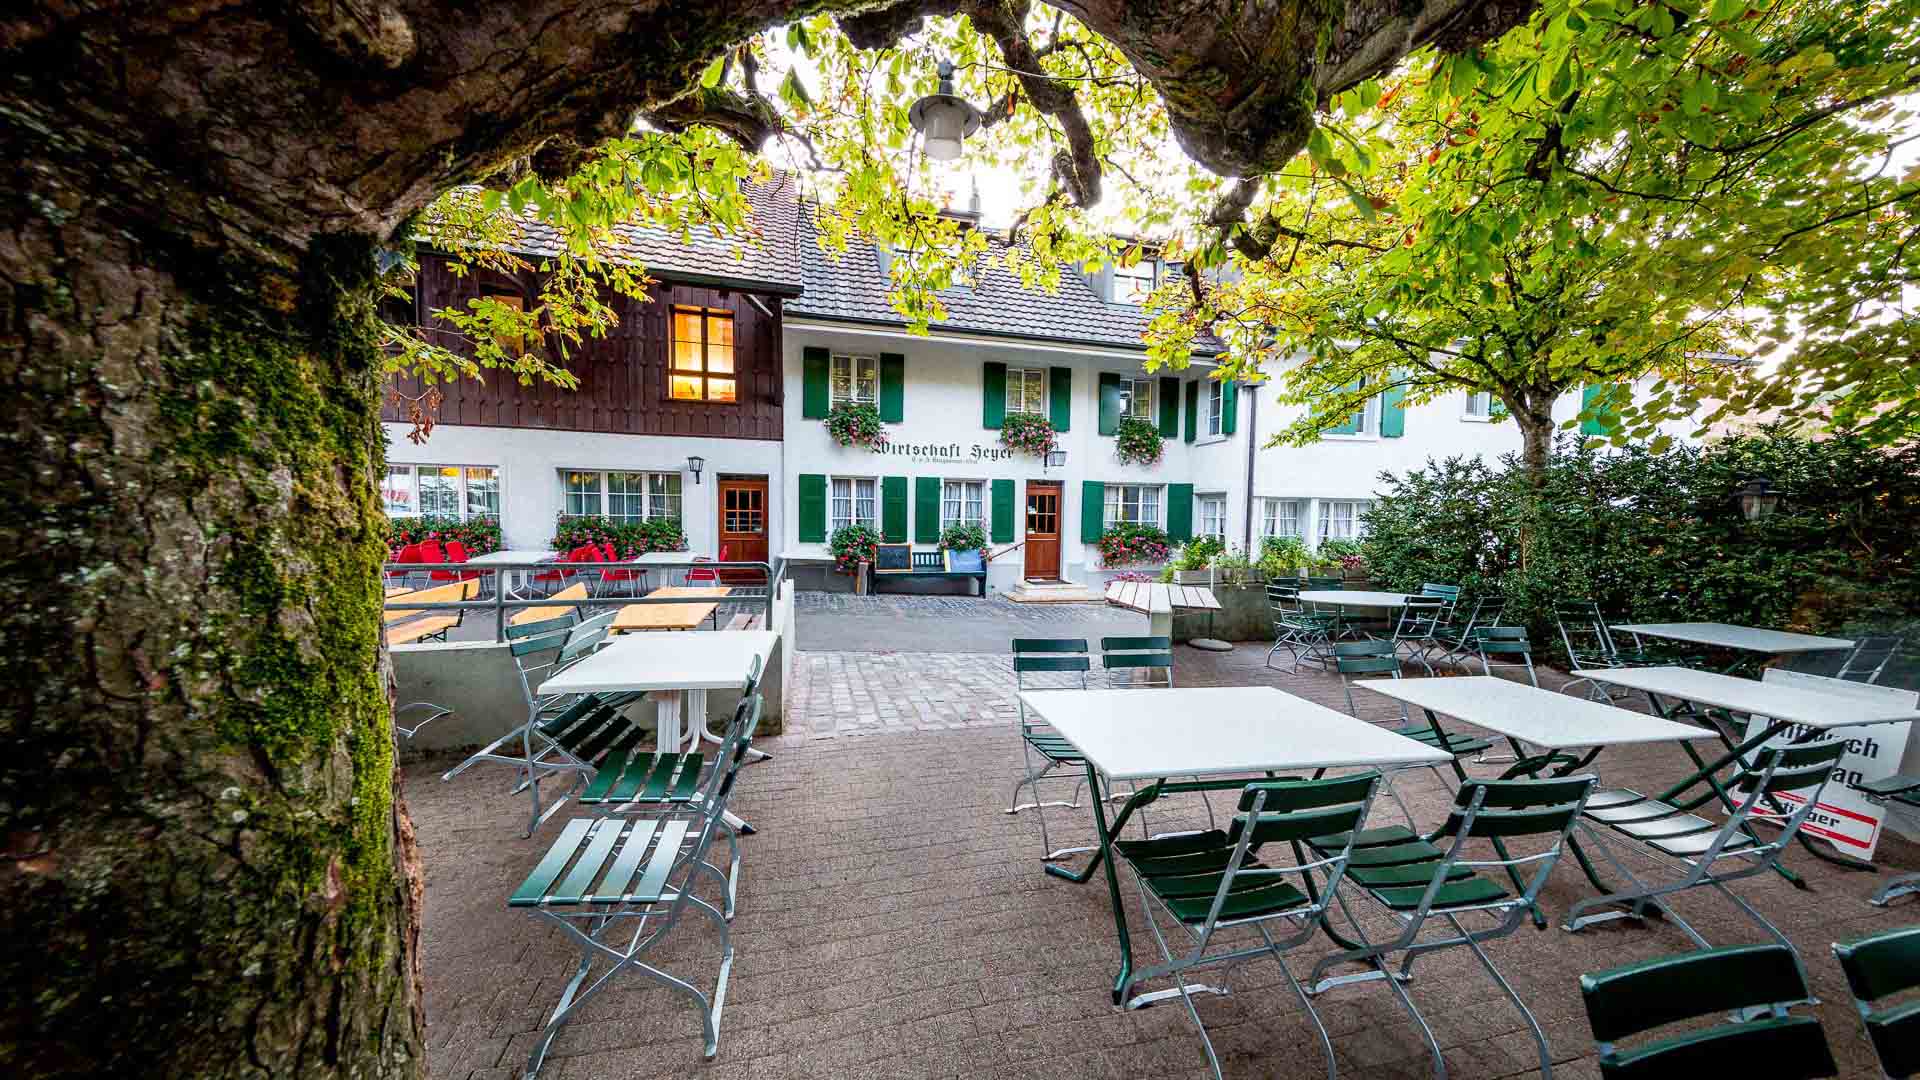 Gartenrestaurant. Sitzplätze im Schatten der Bäume